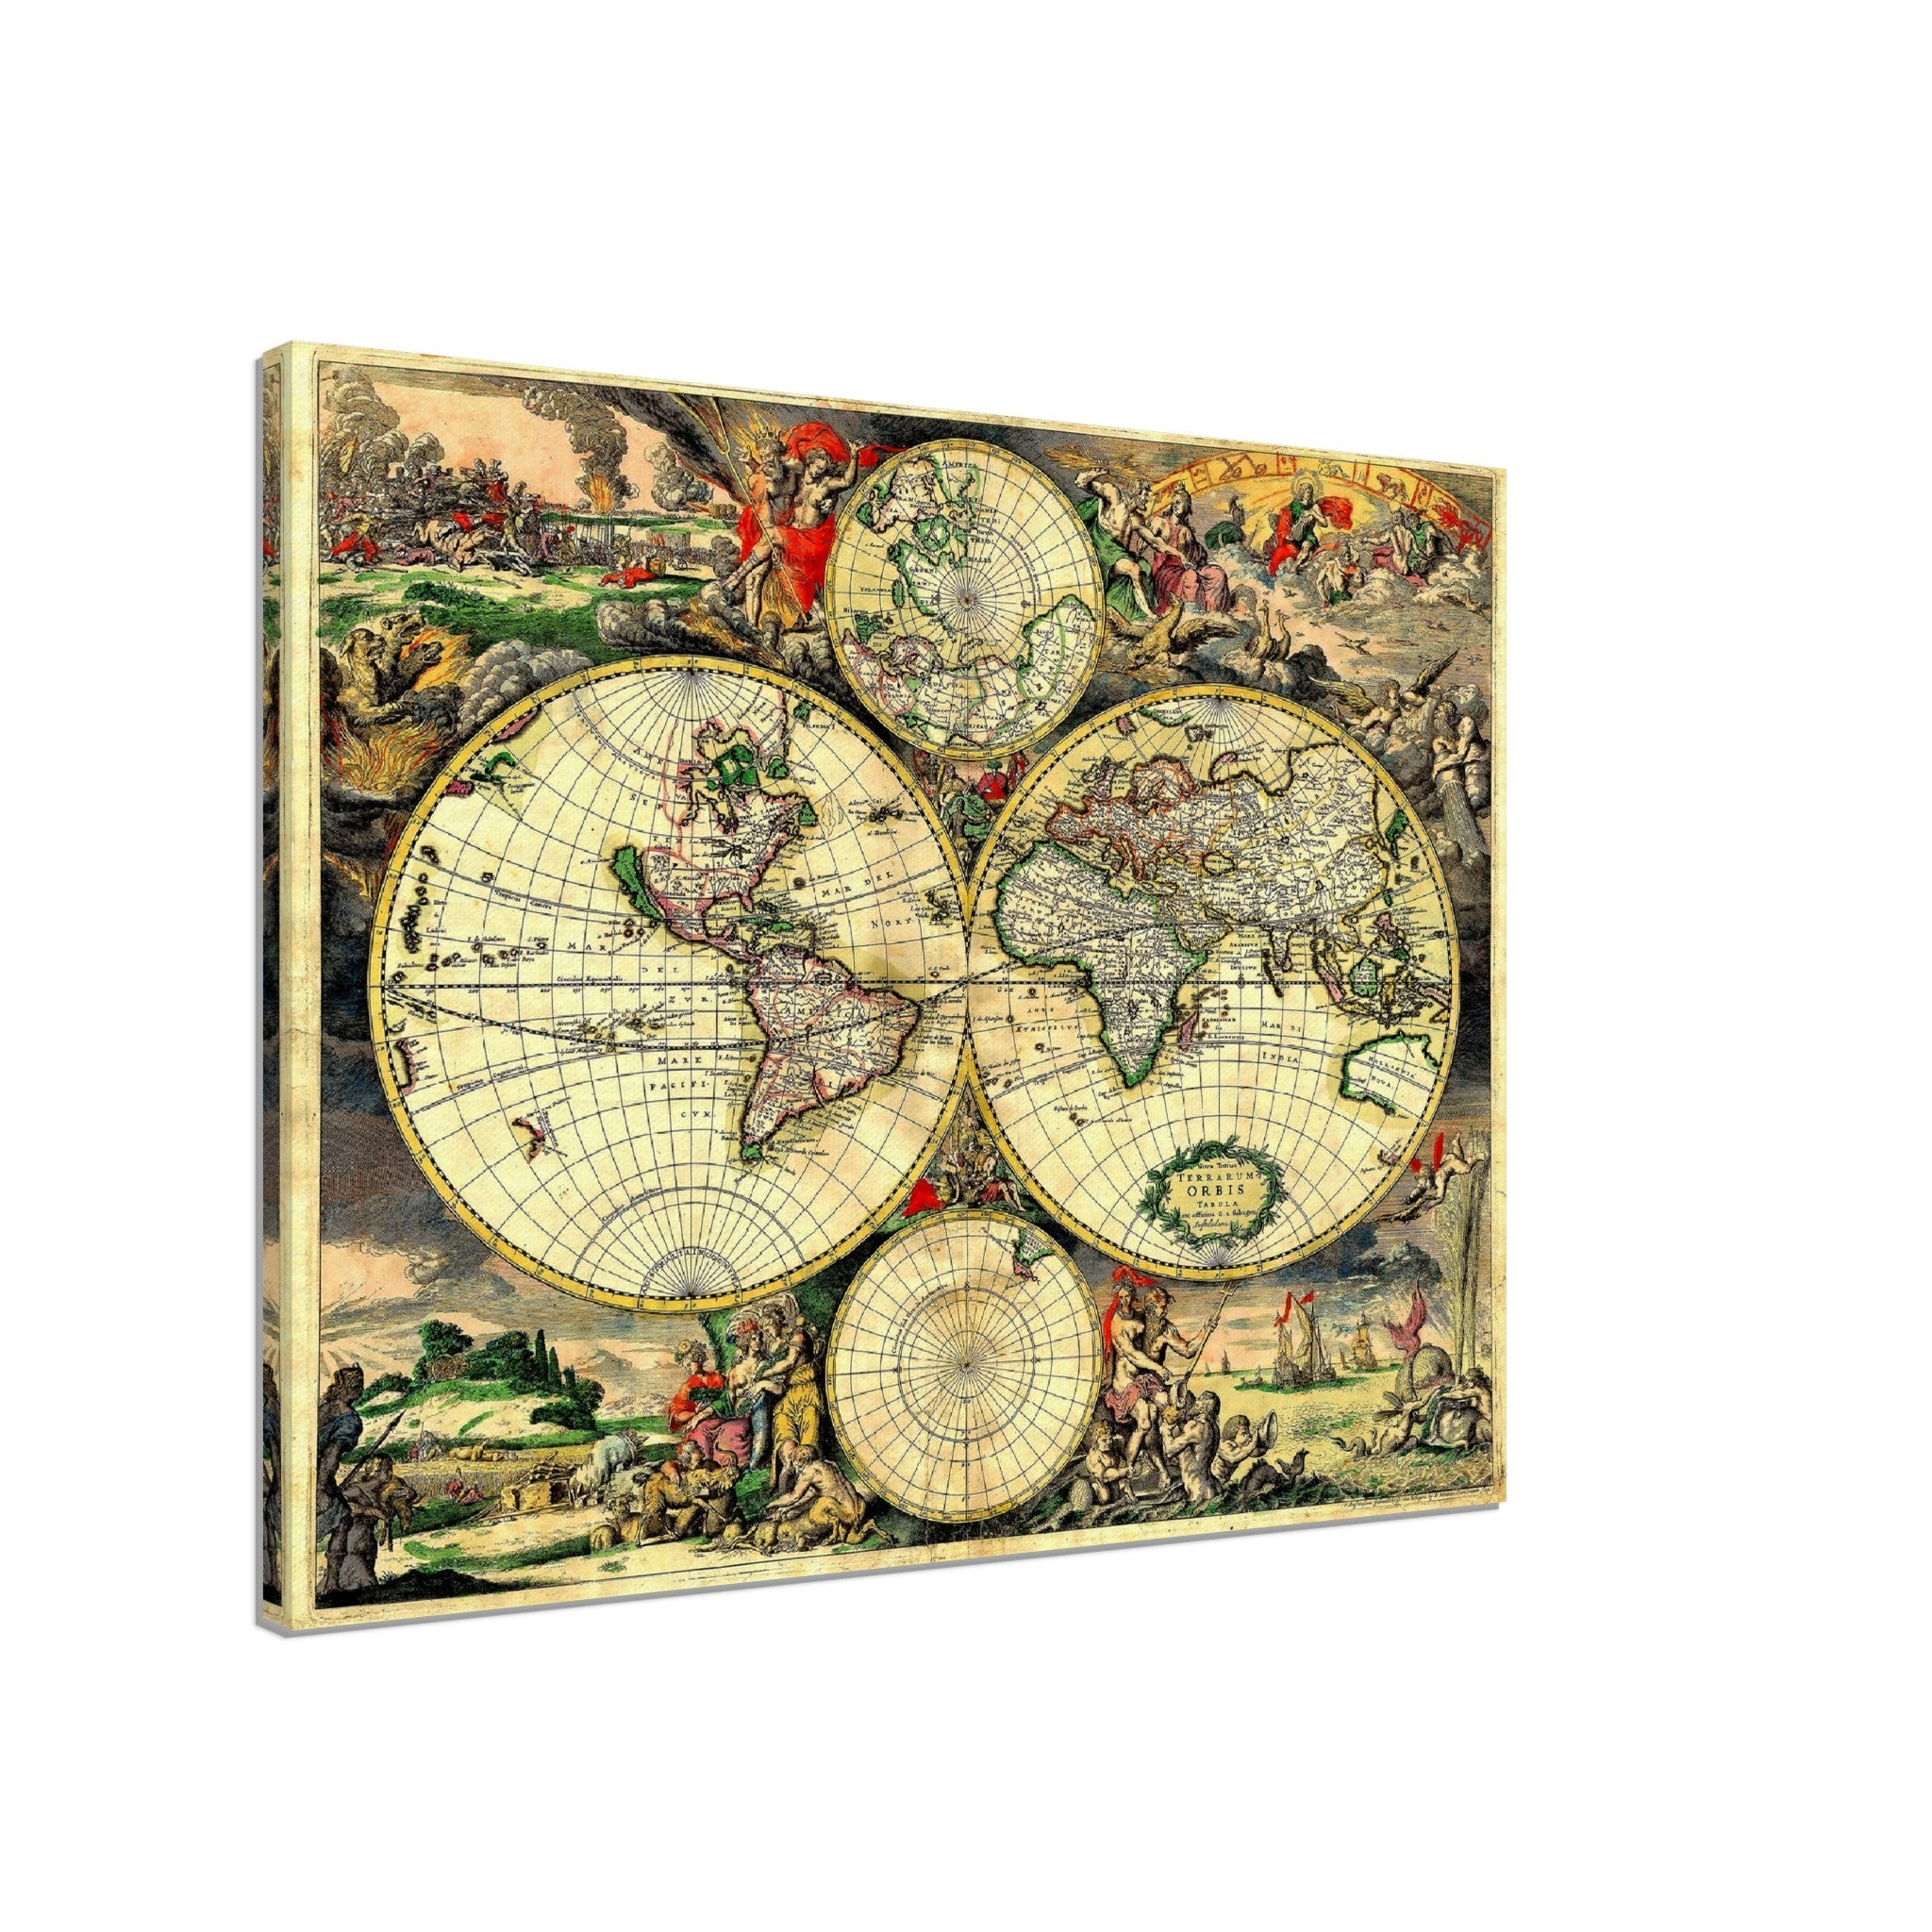 Old World Map Canvas, Vintage World Map Canvas Print From 1689, Terrarum Orbis Tabula Amstelodami, Gerard Van Schagen - WallArtPrints4U